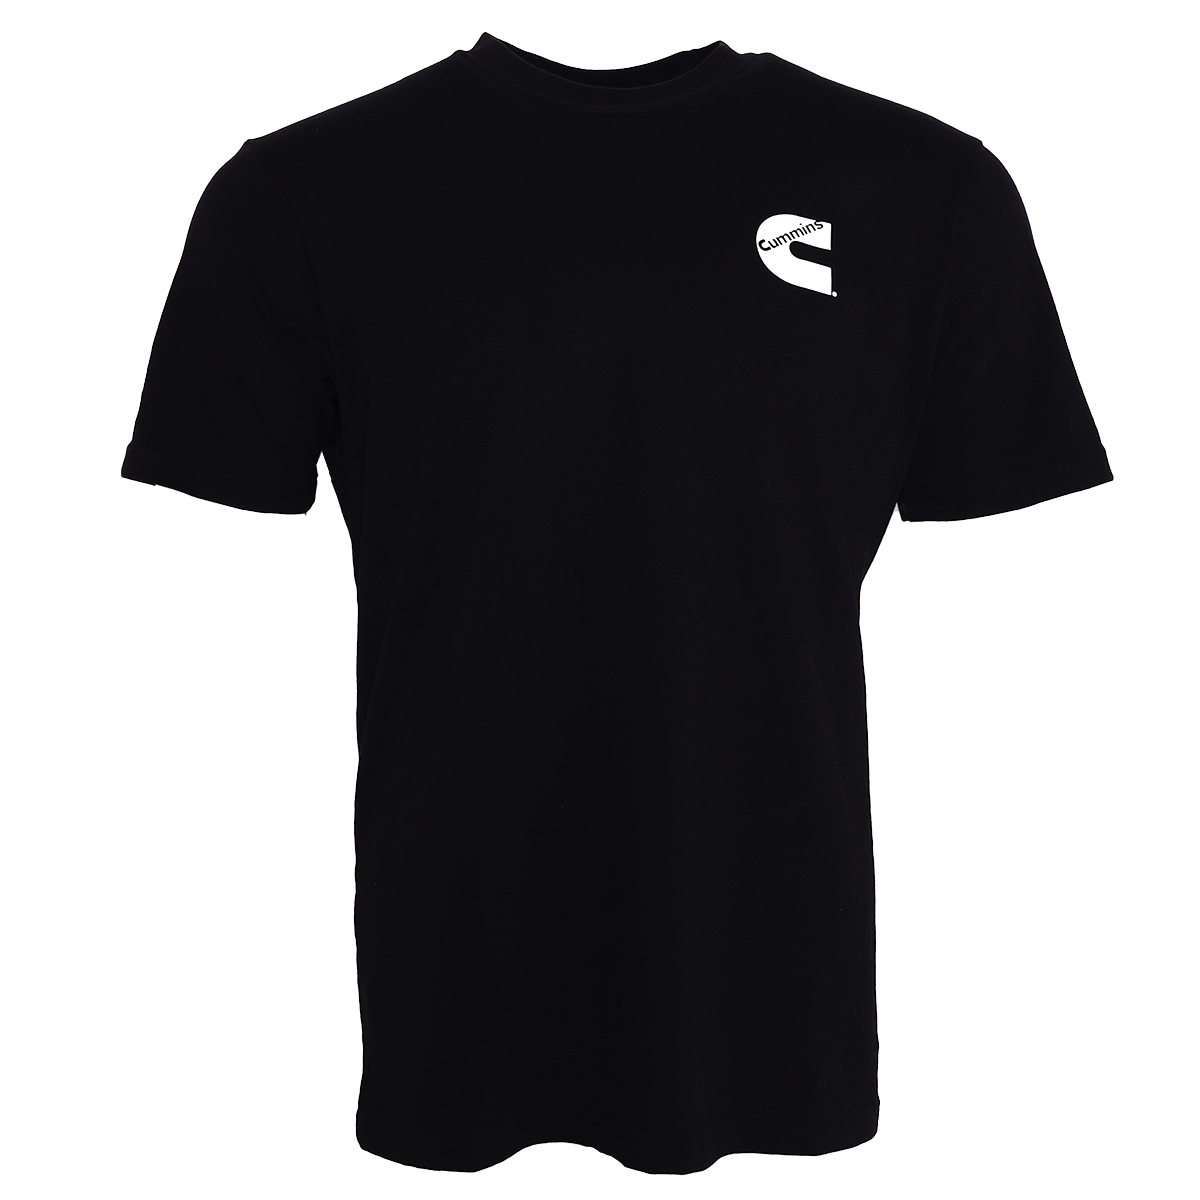 Cummins Unisex T-Shirt Short Sleeve Black Cotton Tagless Tee - 3XL